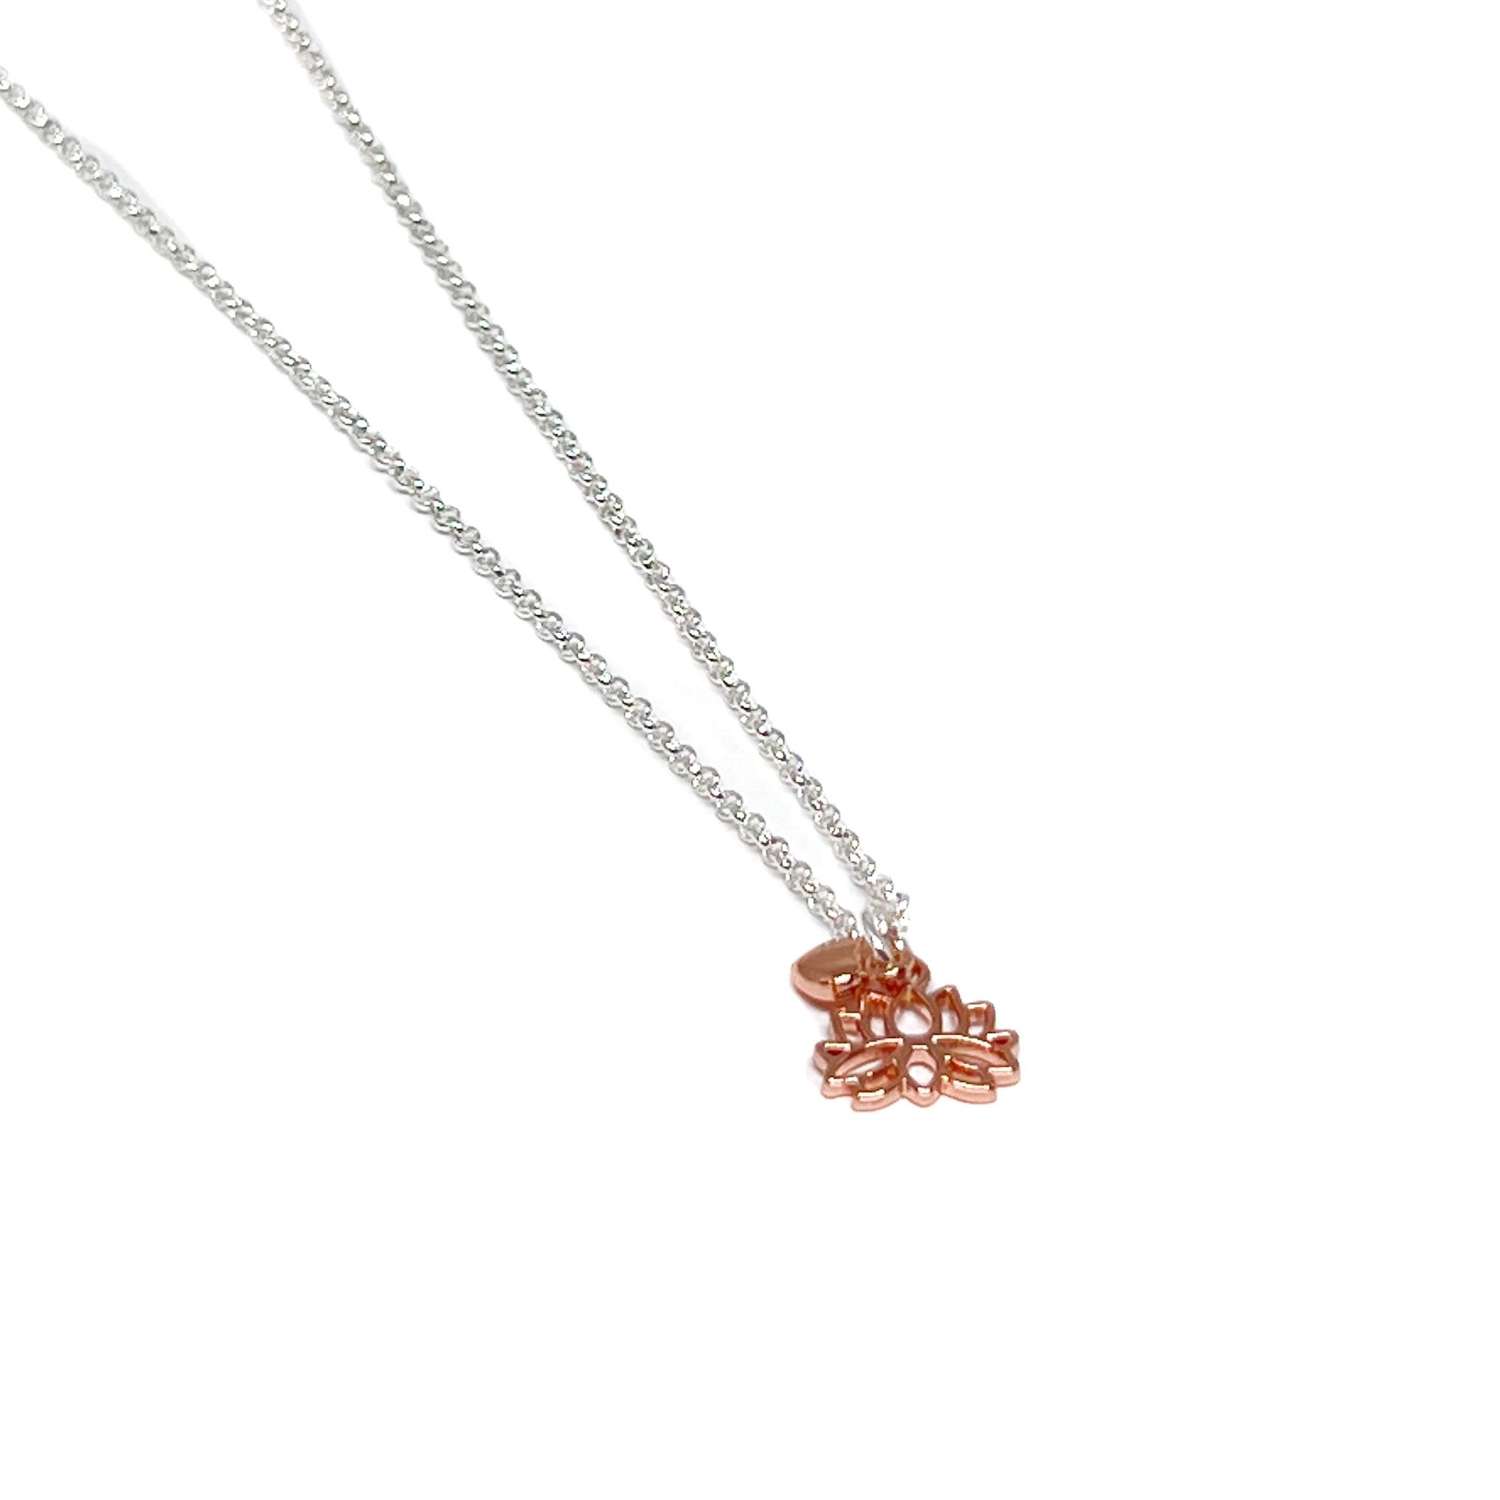 Indigo Lotus Flower Necklace - Rose Gold